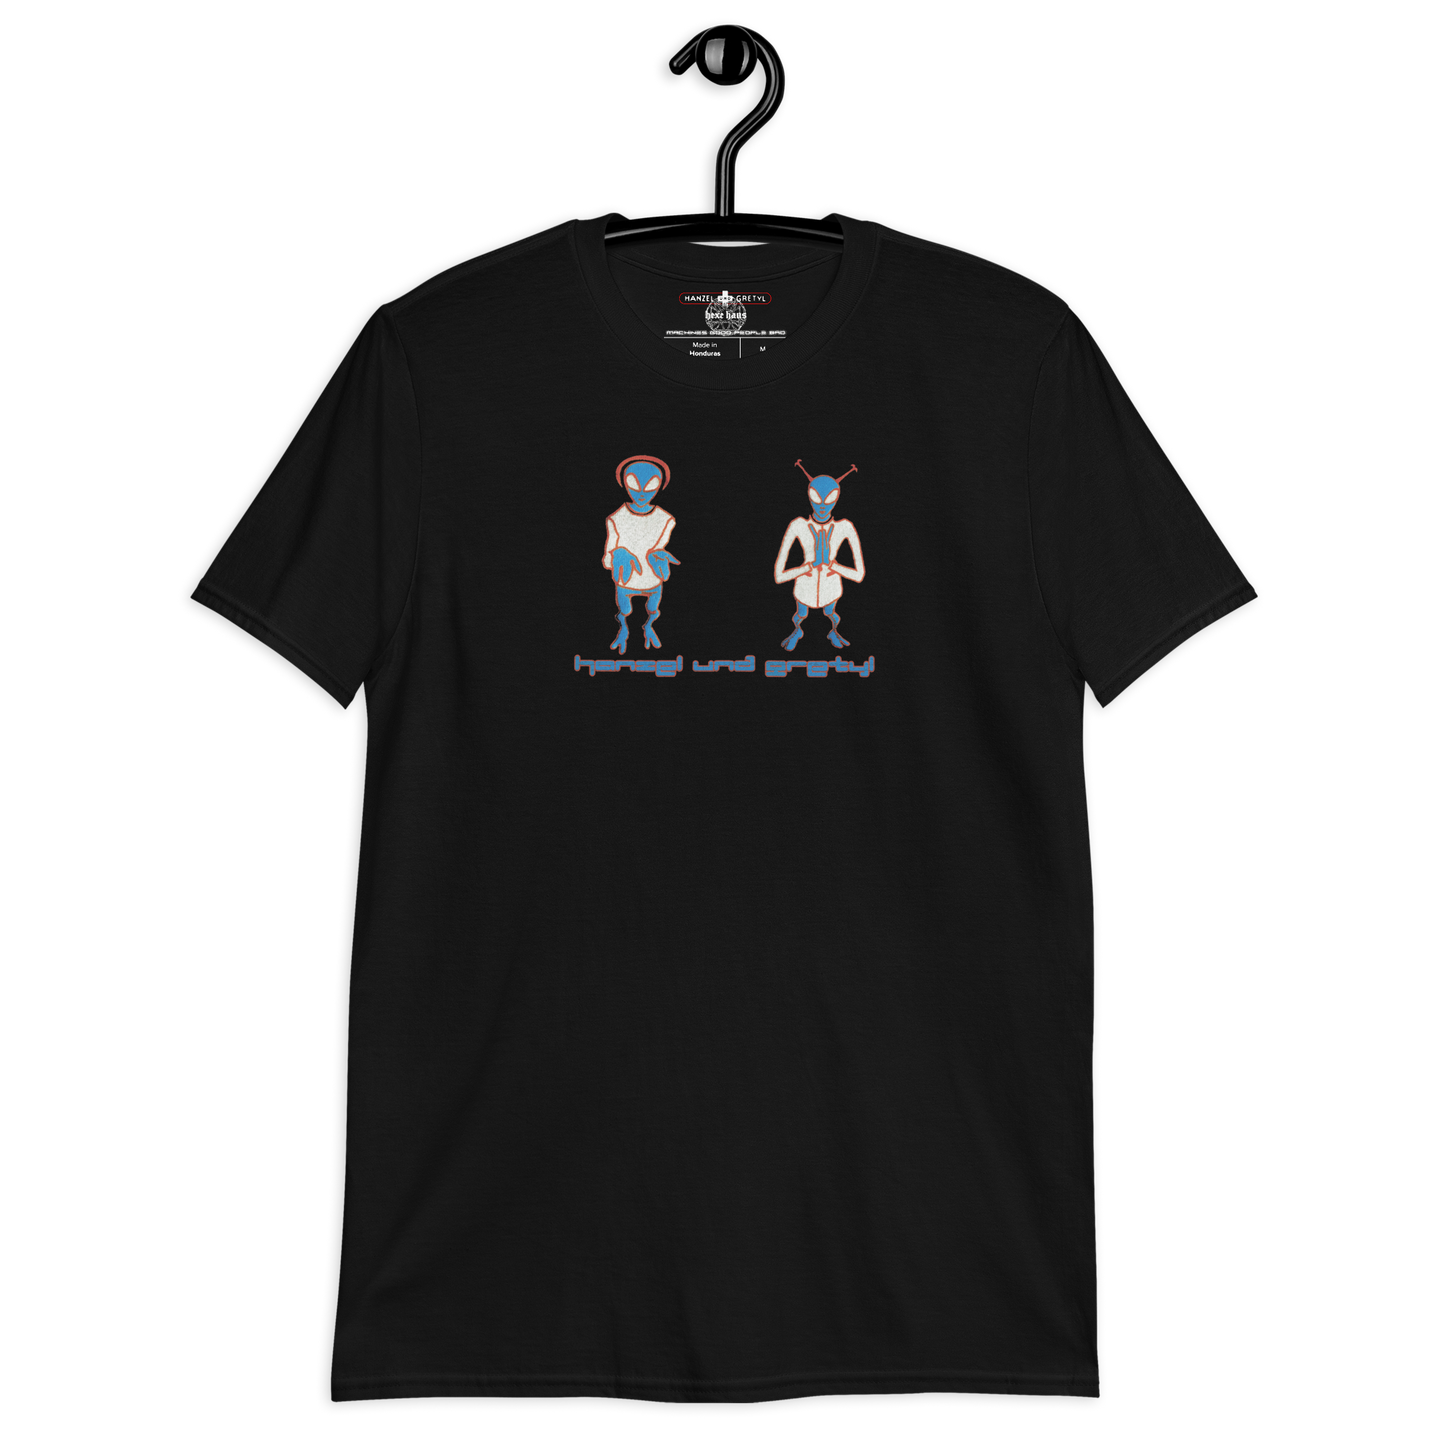 Das Alienator-T-Shirt